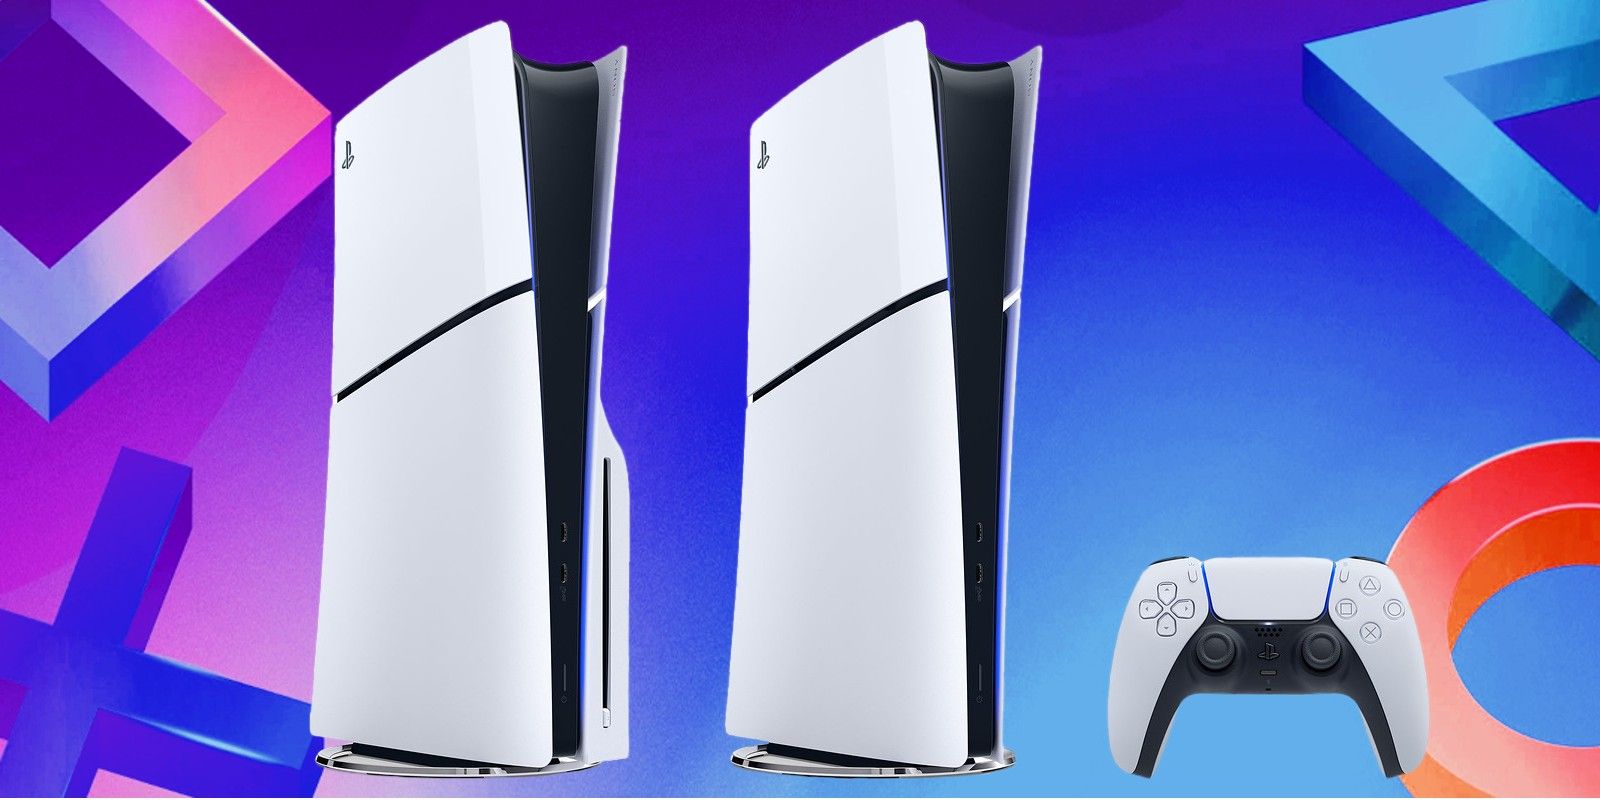 PlayStation 5 Slim - Official Model Reveal Trailer 